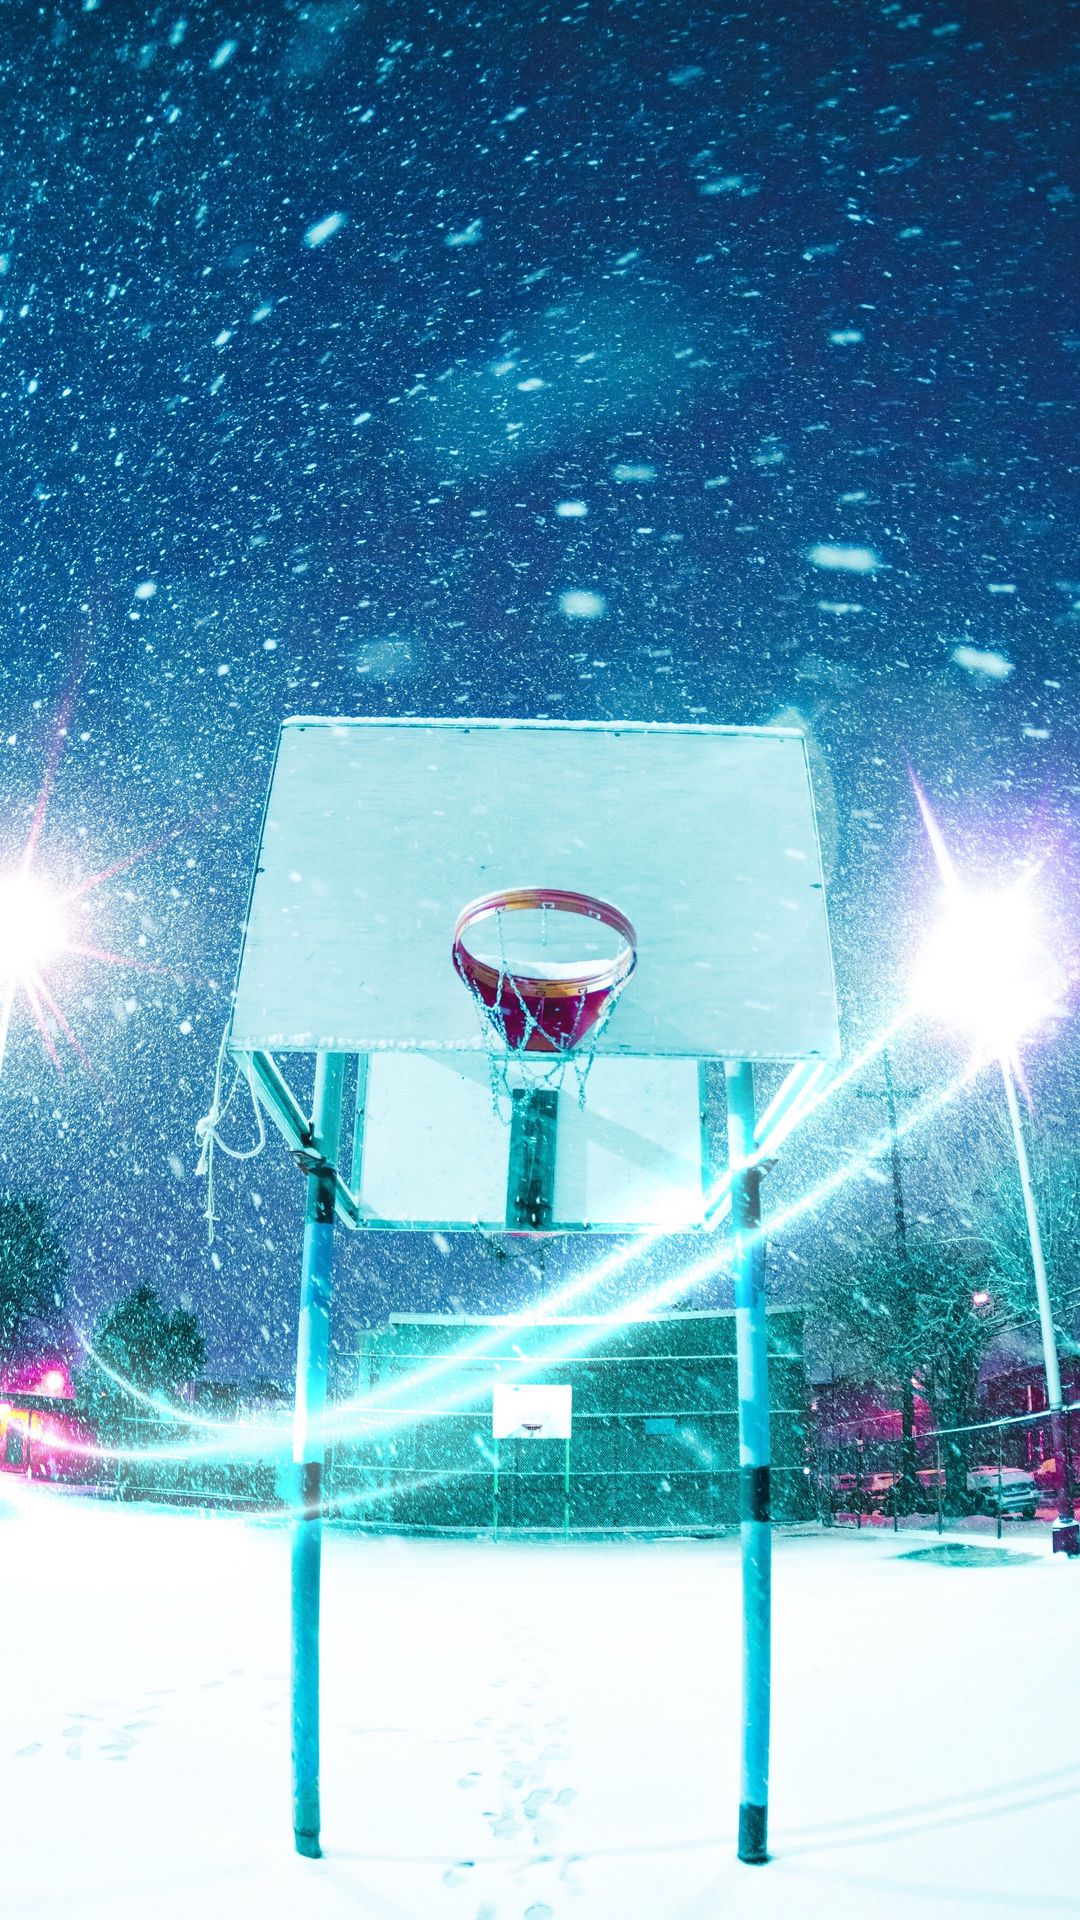 Download wallpaper 1440x2960 lebron james basketball player artwork samsung  galaxy s8 samsung galaxy s8 plus 1440x2960 hd background 9301